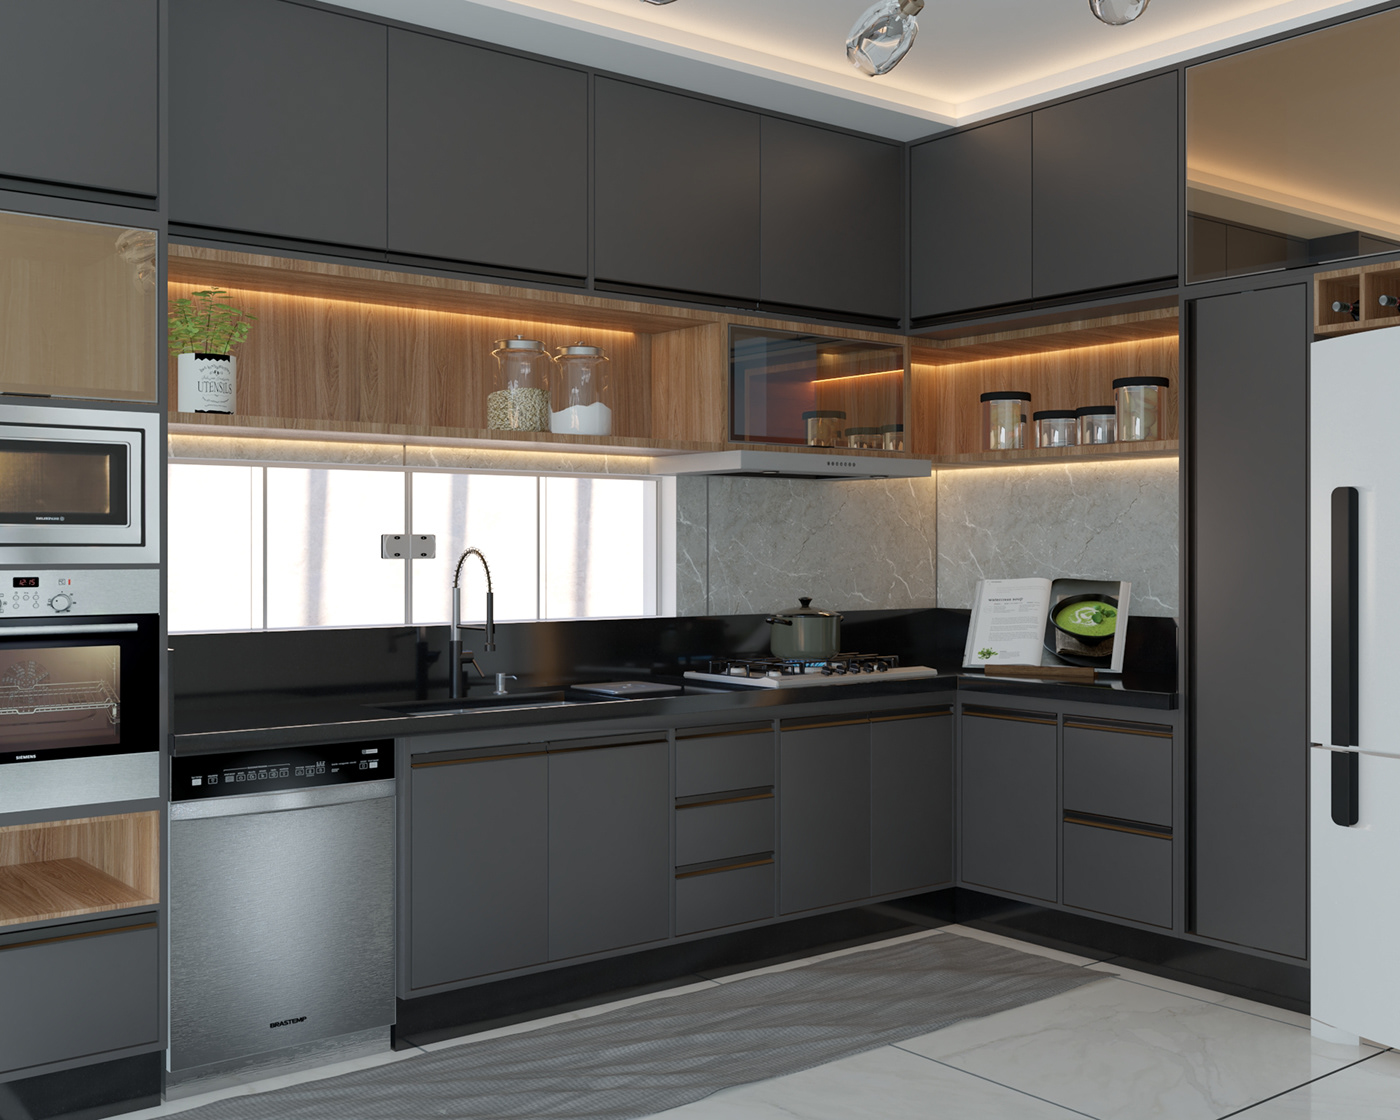 kitchen cozinha Cozinha Planejada interior design  Render vray architecture 3D rendering arauco